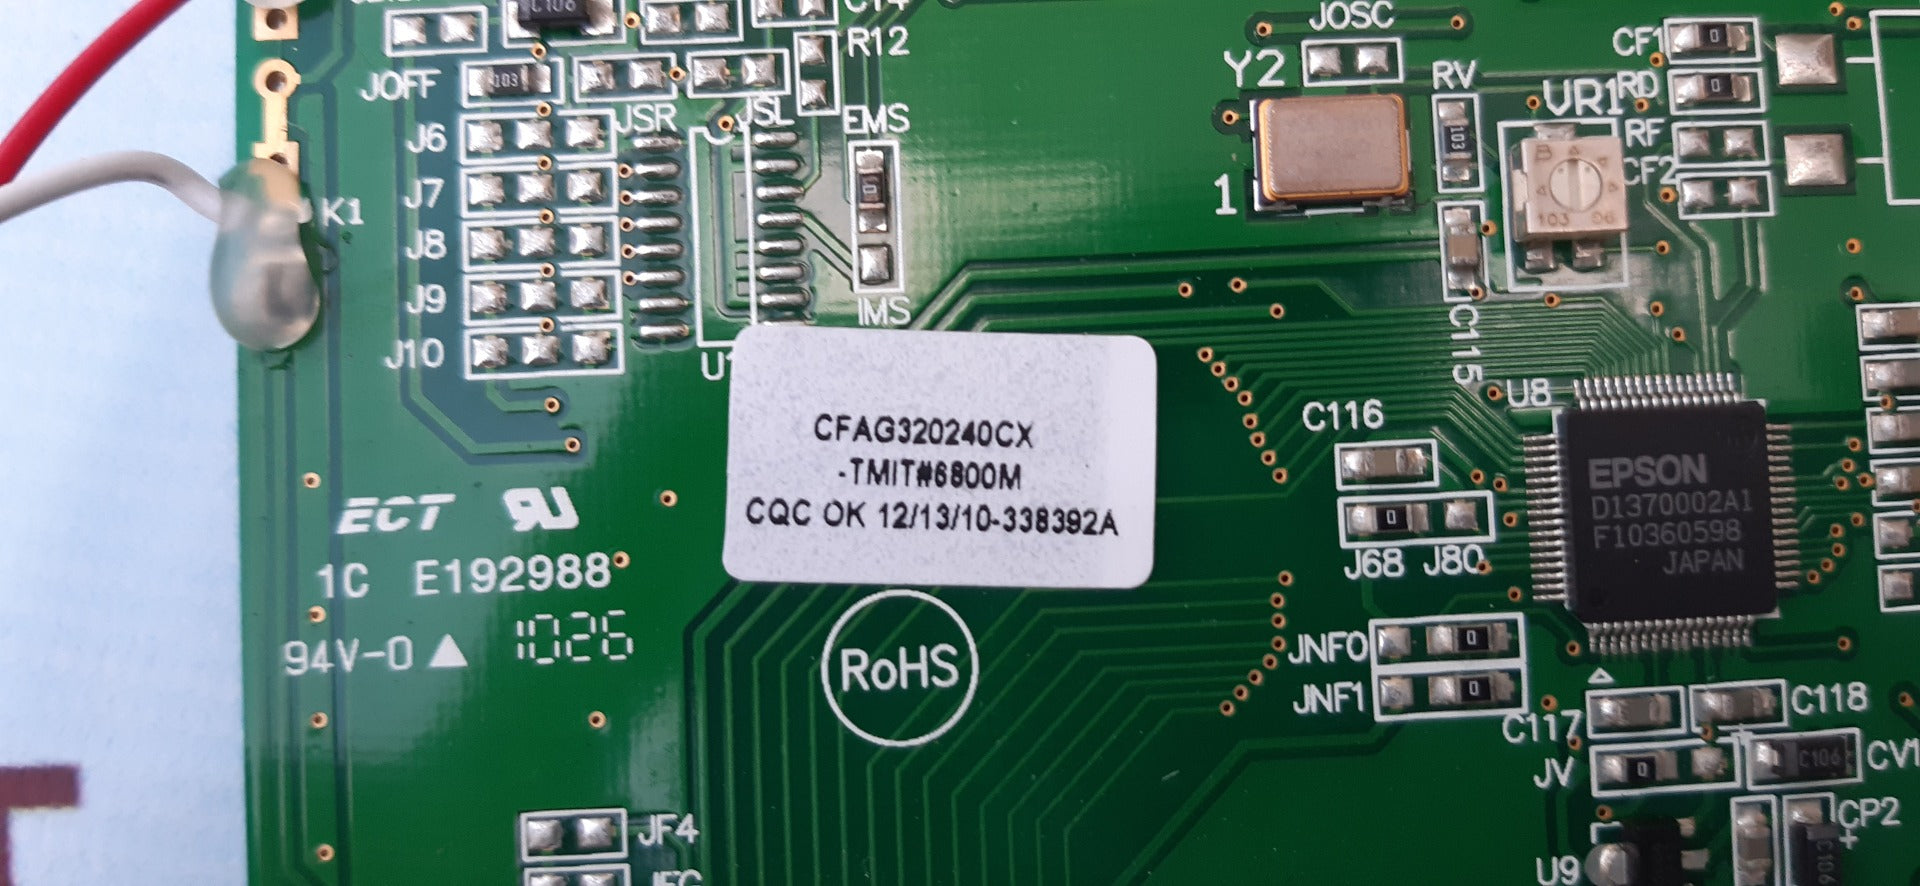 Cfag320240cx monochrome lcd with abb 1hyc418000-402 card